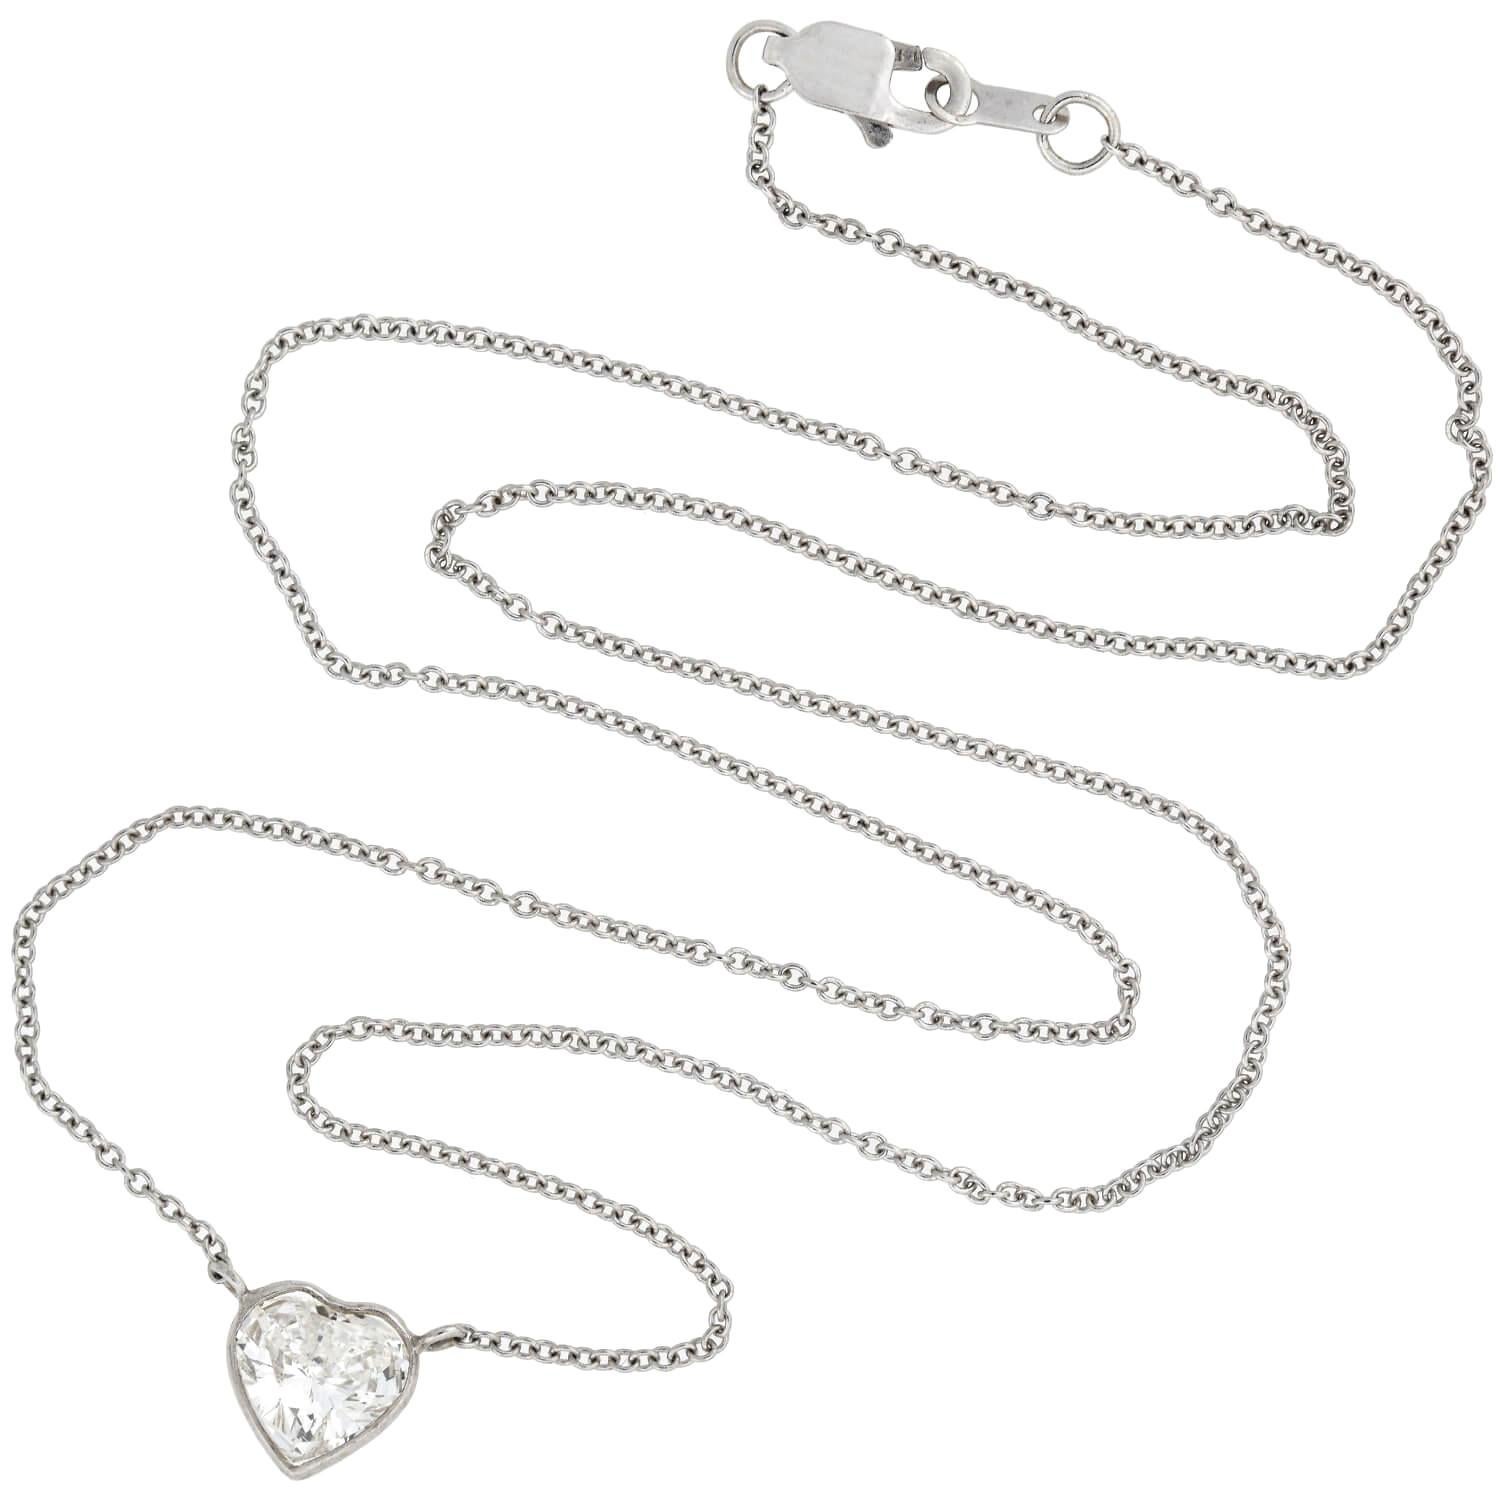 1 Carat Heart-Shaped Diamond Pendant Necklace For Sale